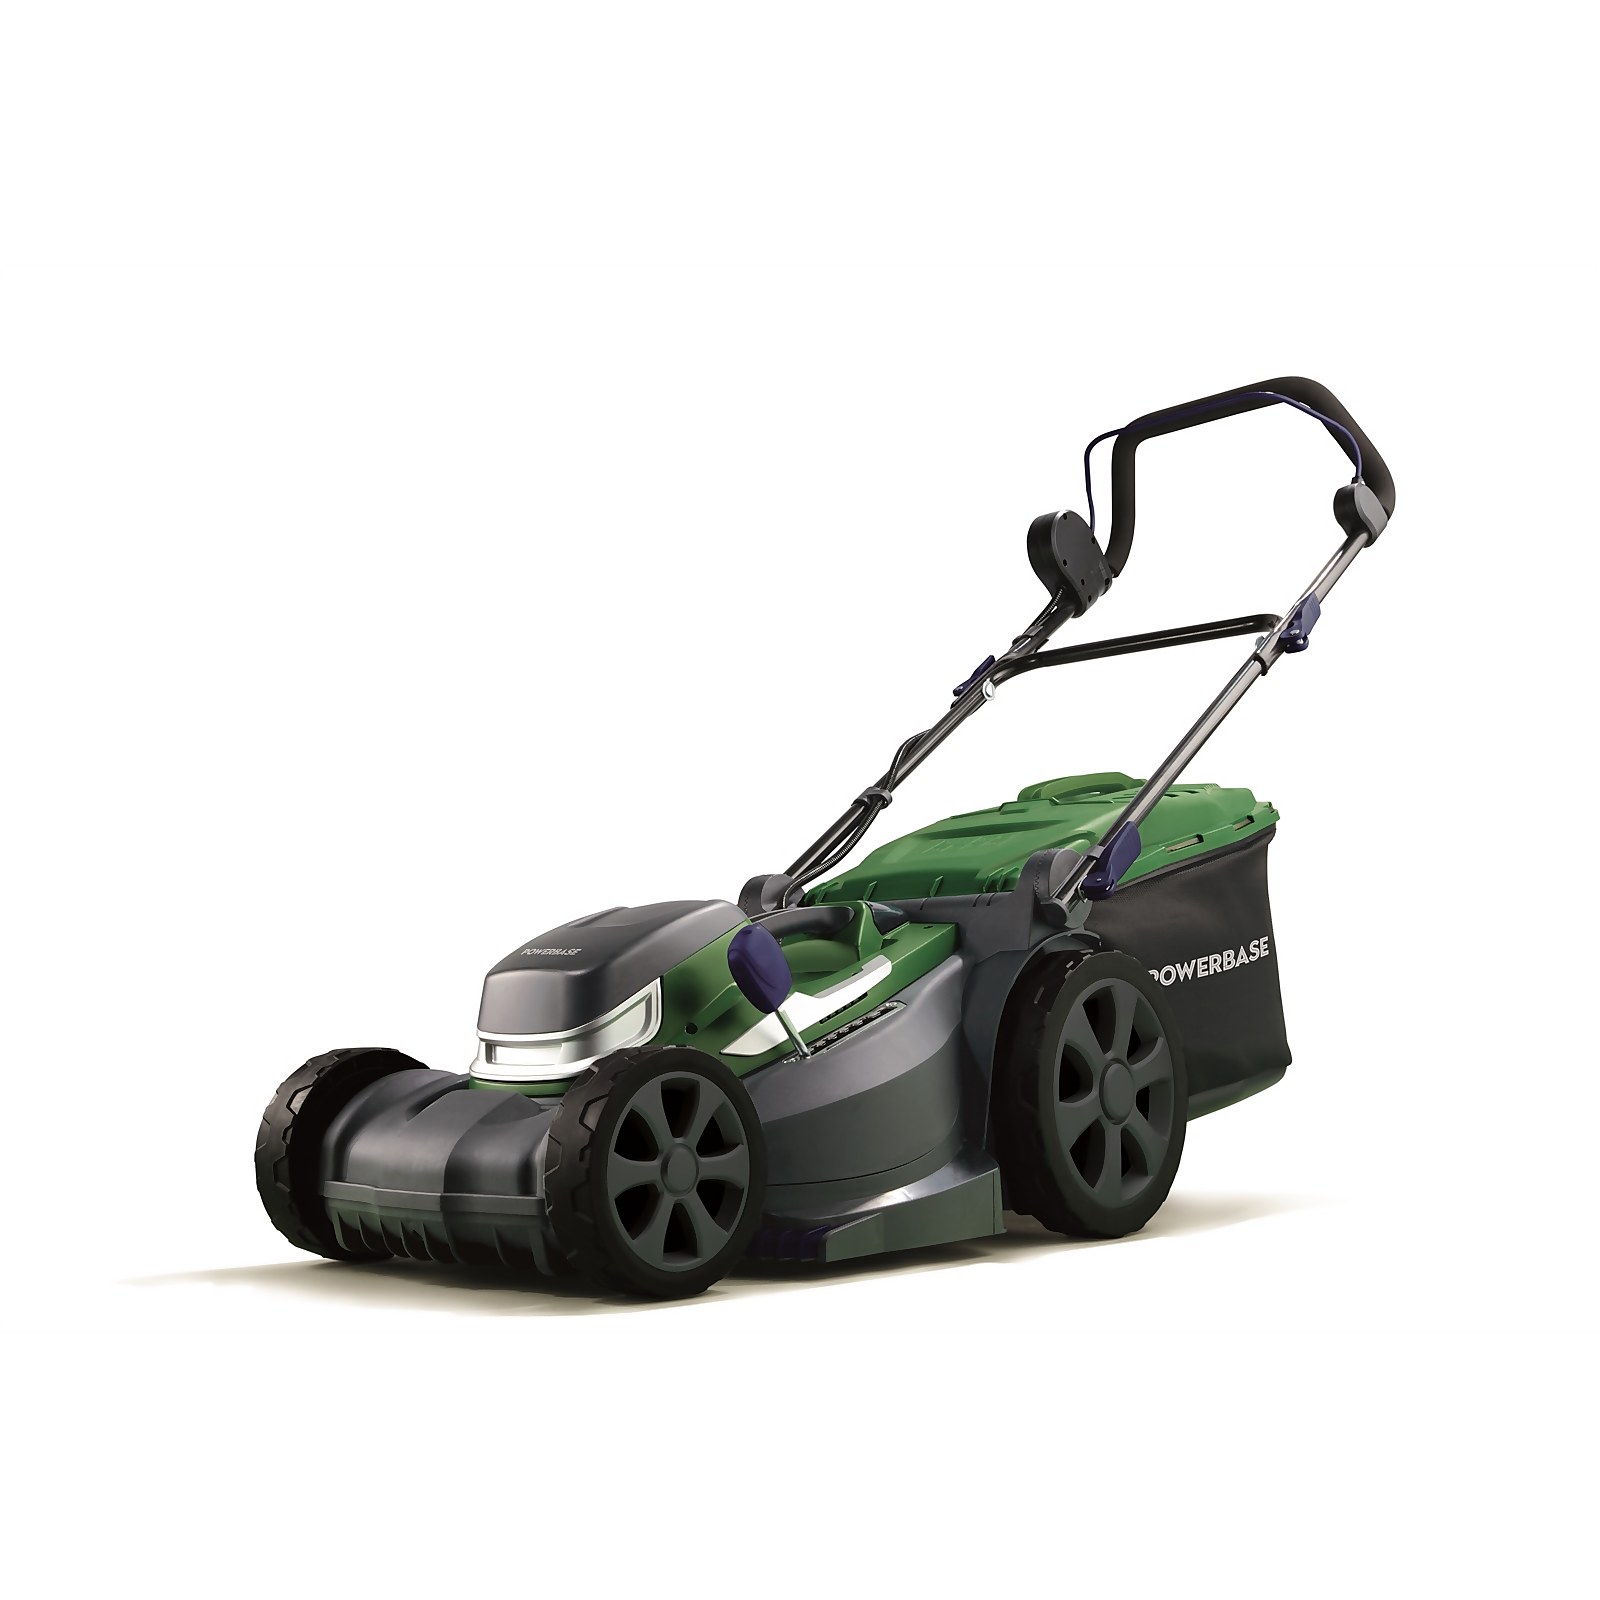 Powerbase 40V 37cm Cordless Lawn Mower